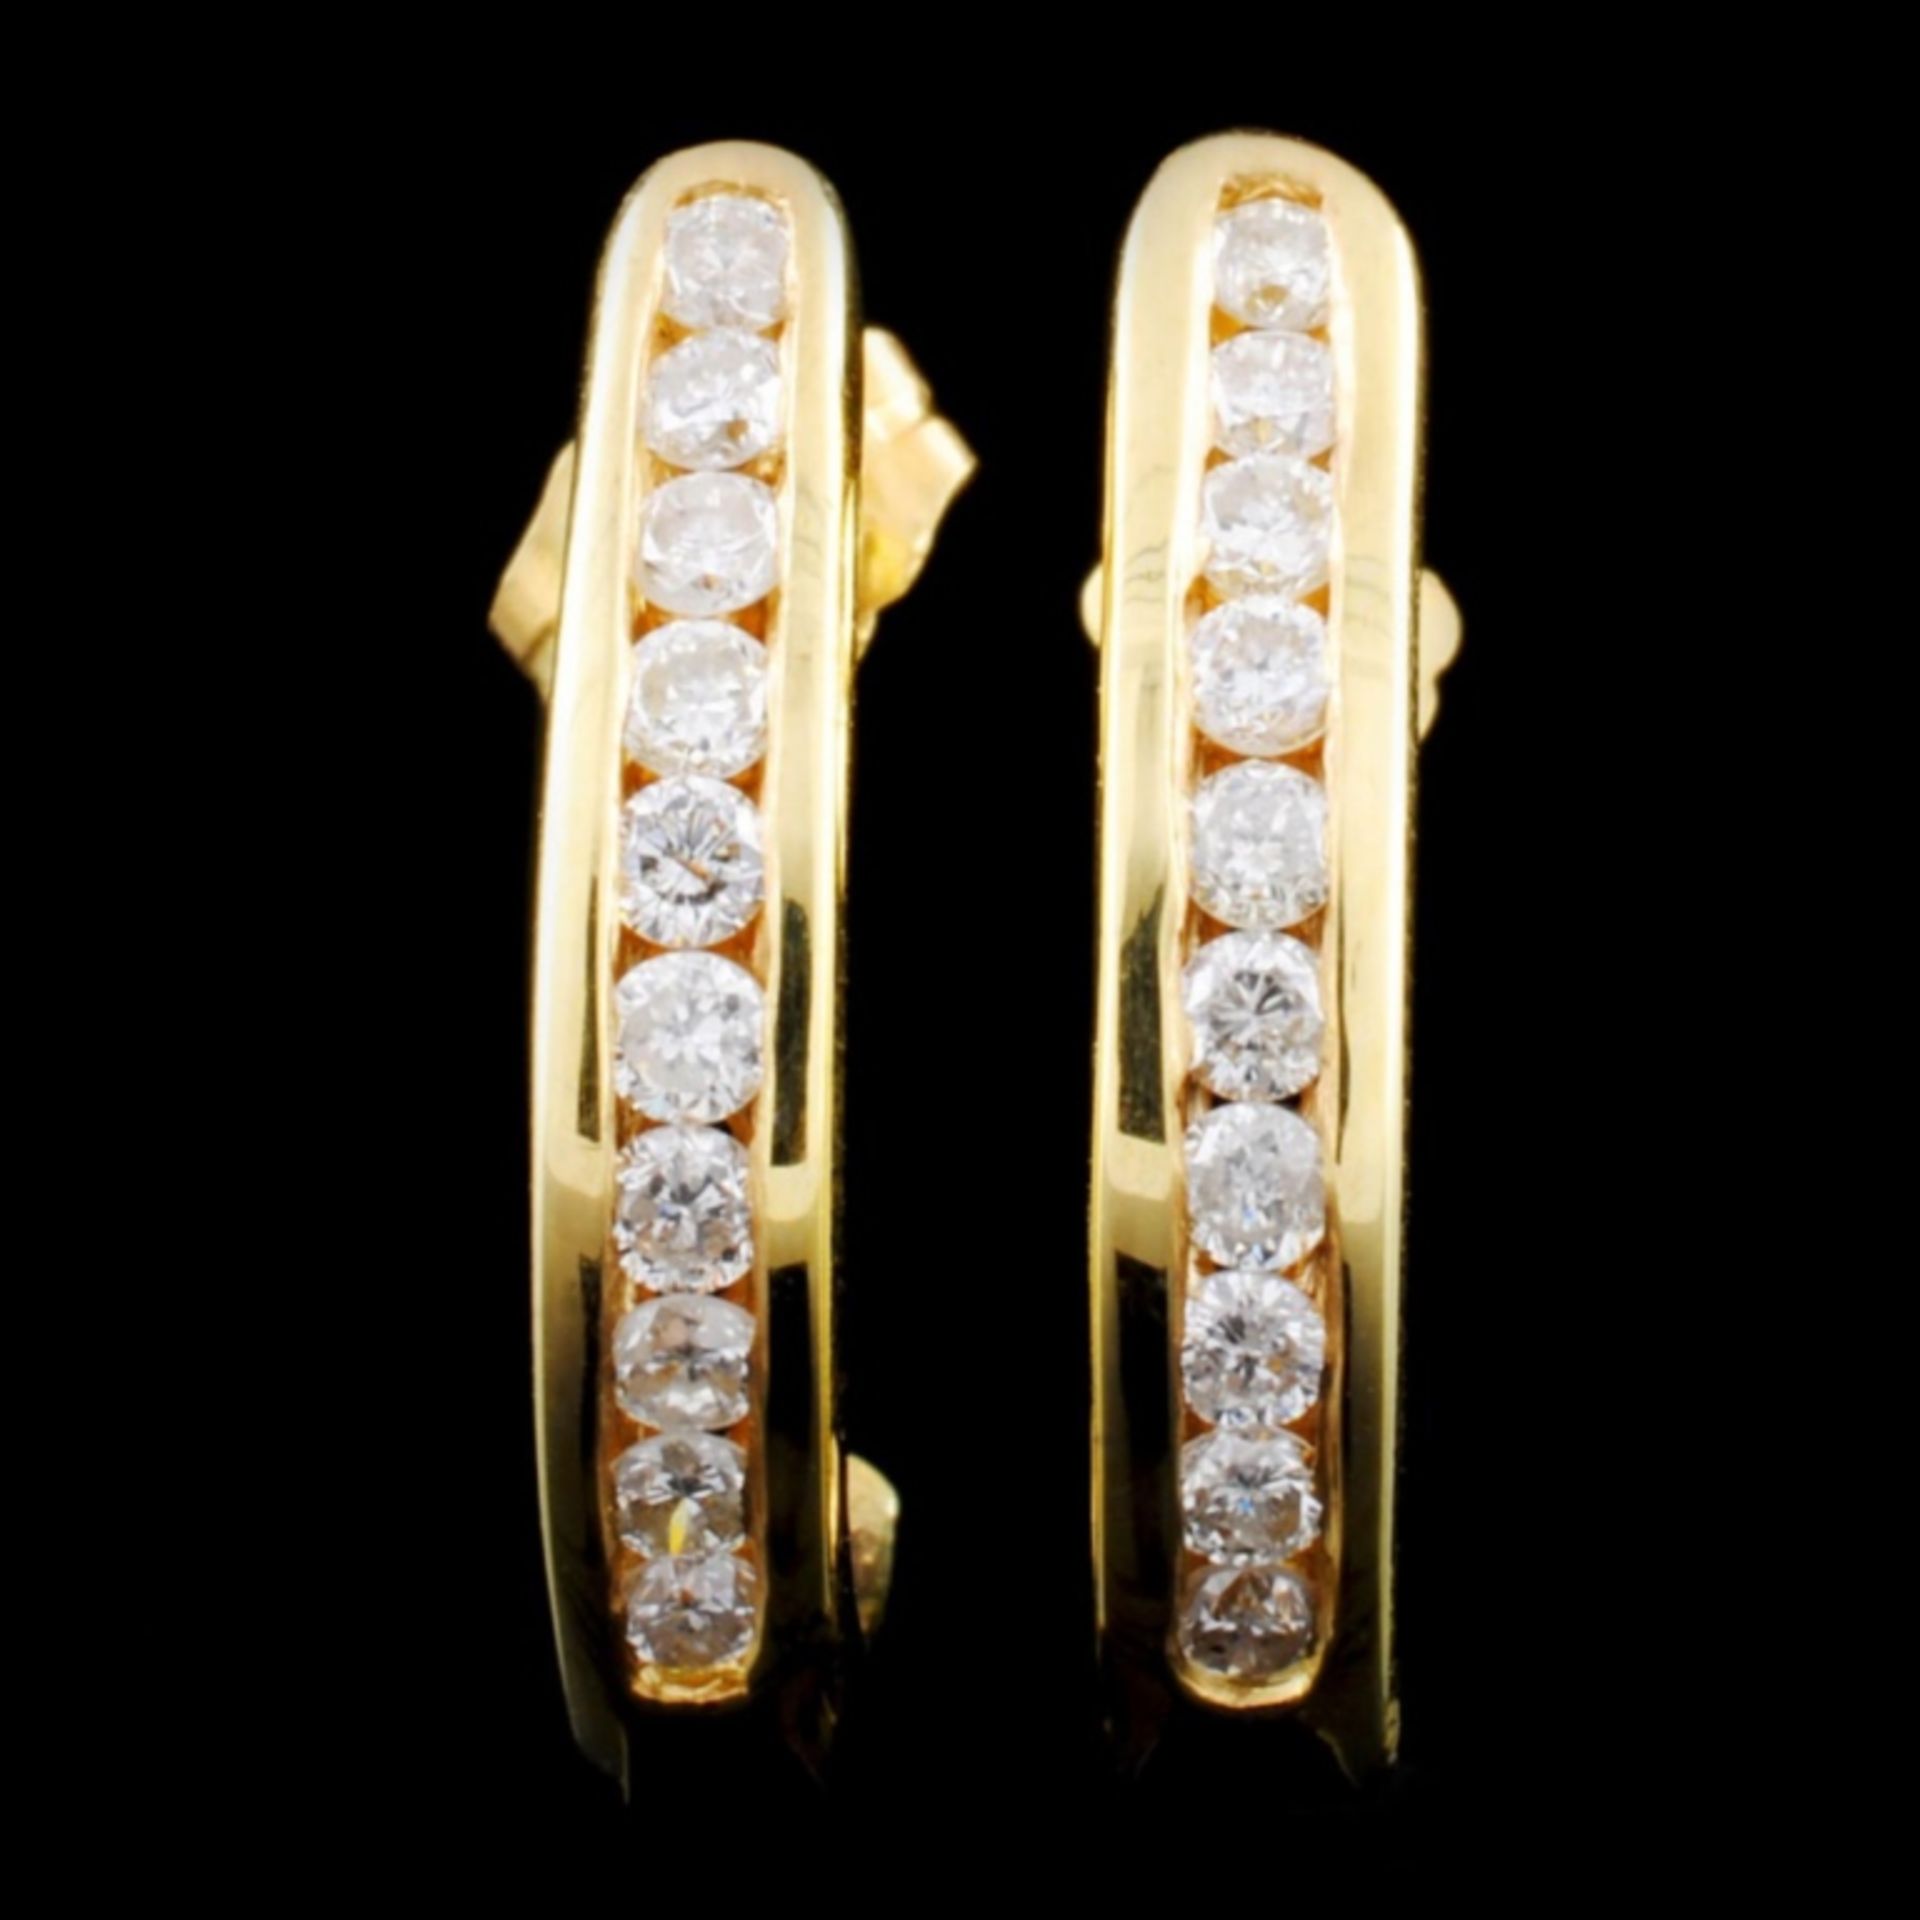 14K Gold 0.53ctw Diamond Earrings - Image 2 of 3